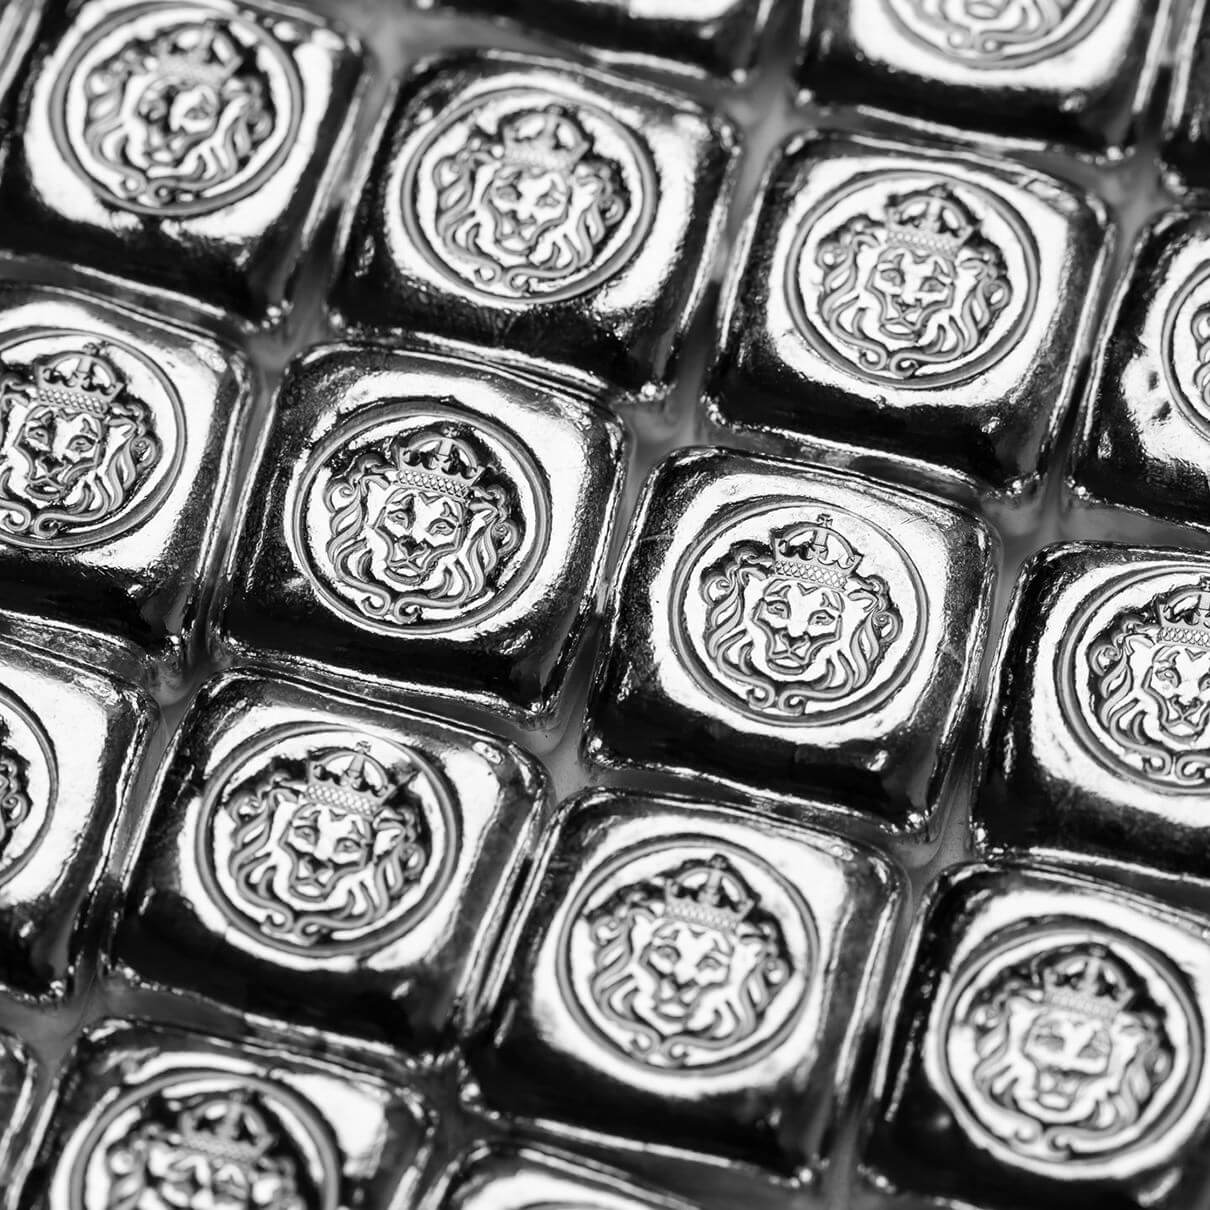 Buy Scottsdale Silver Lion 1 oz .999 Silver Cast Bar fine silver coins by  Scottsdale Mint